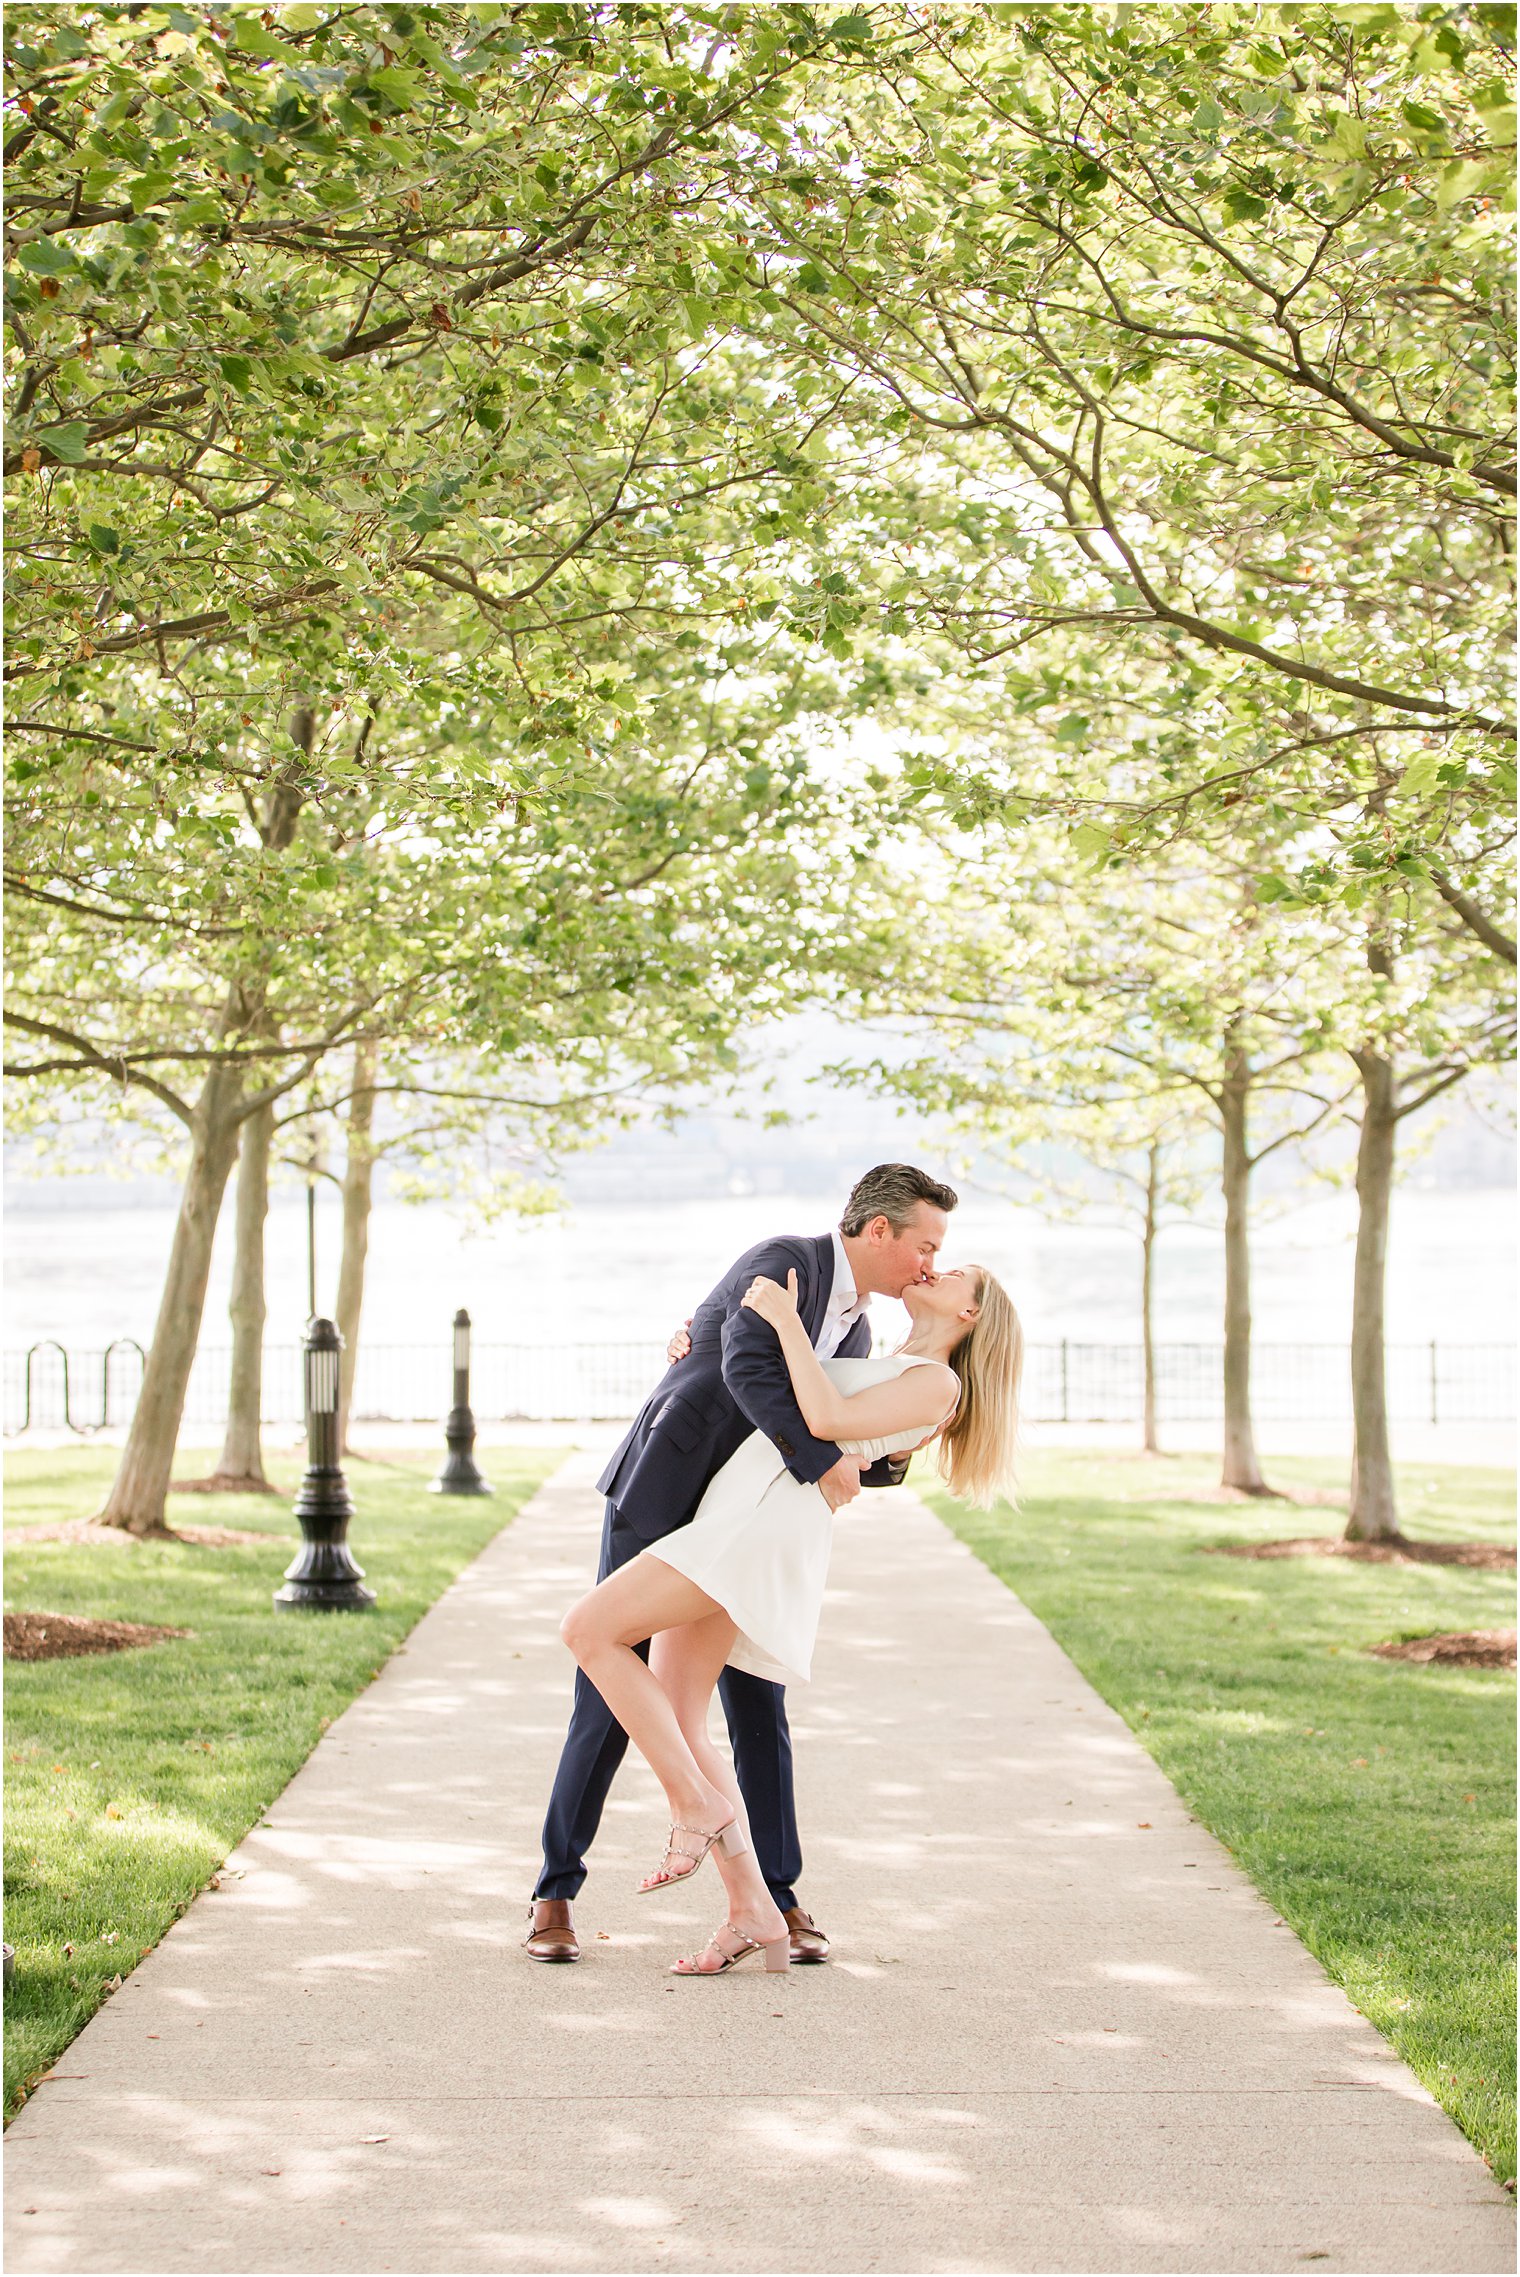 Groom dipping bride during romantic kiss at Engagement photos at Hoboken park